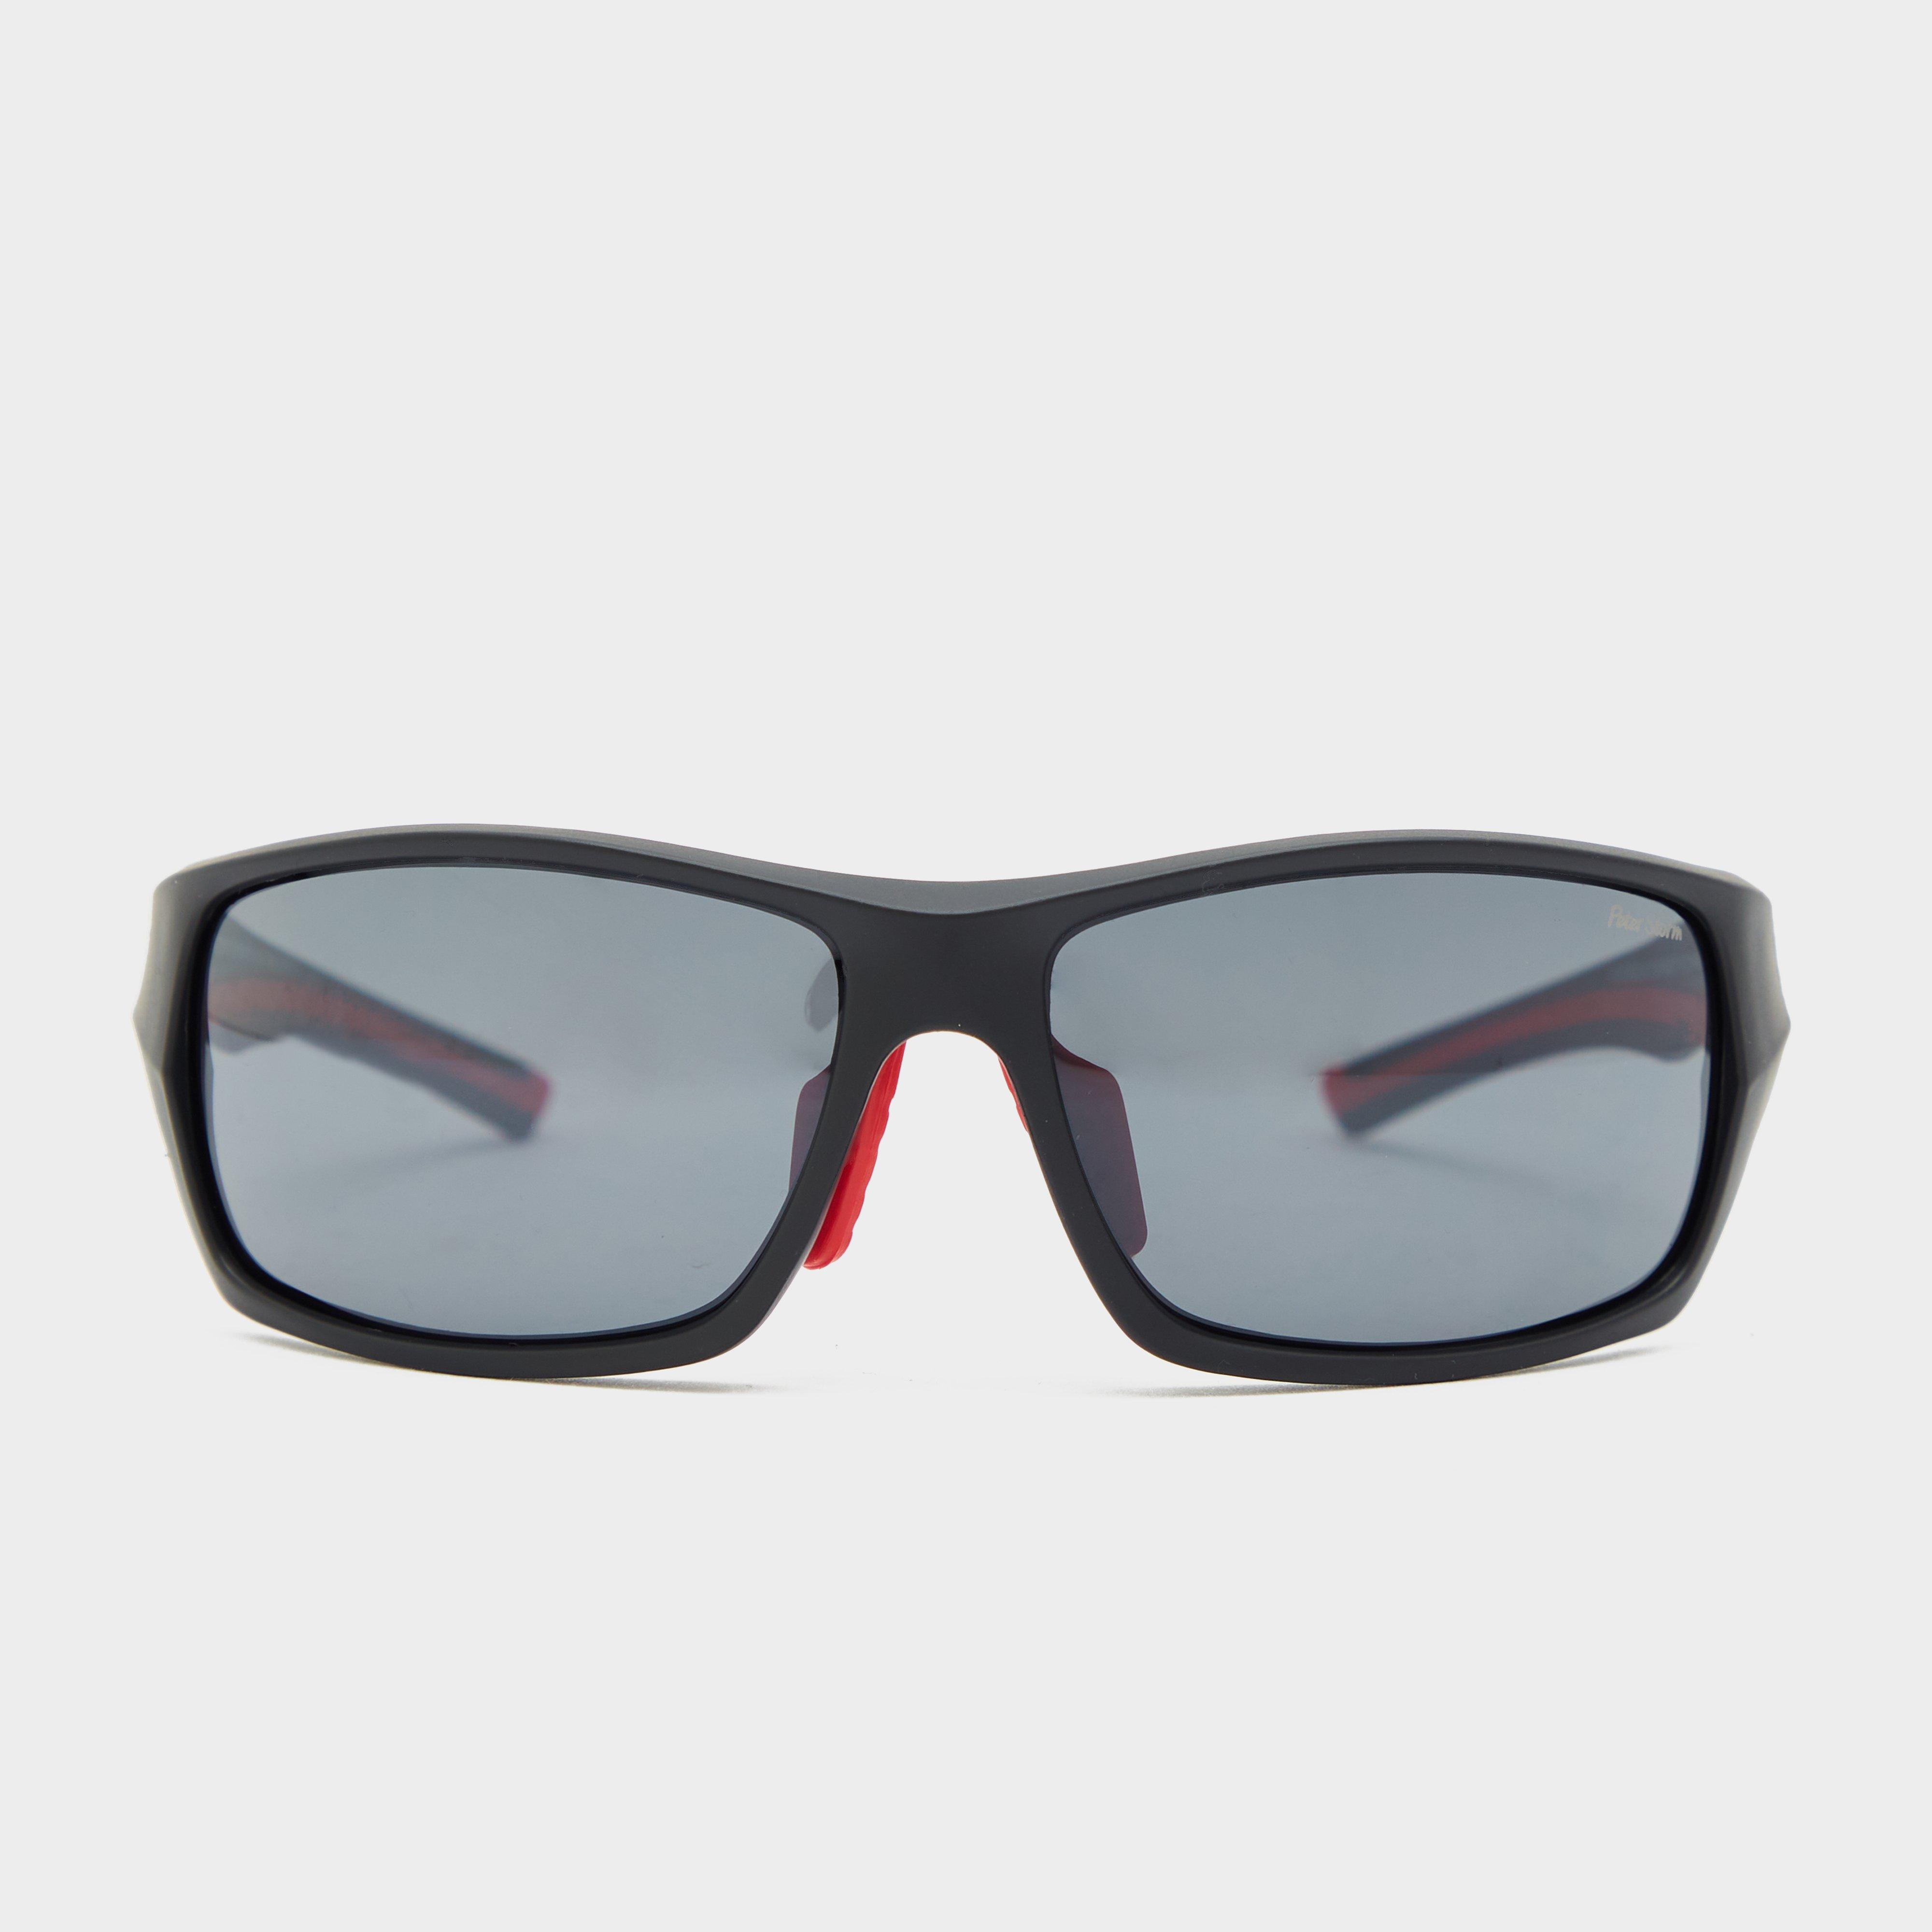 Image of Peter Storm Torquay Sunglasses - Blk/Dgy, BLK/DGY